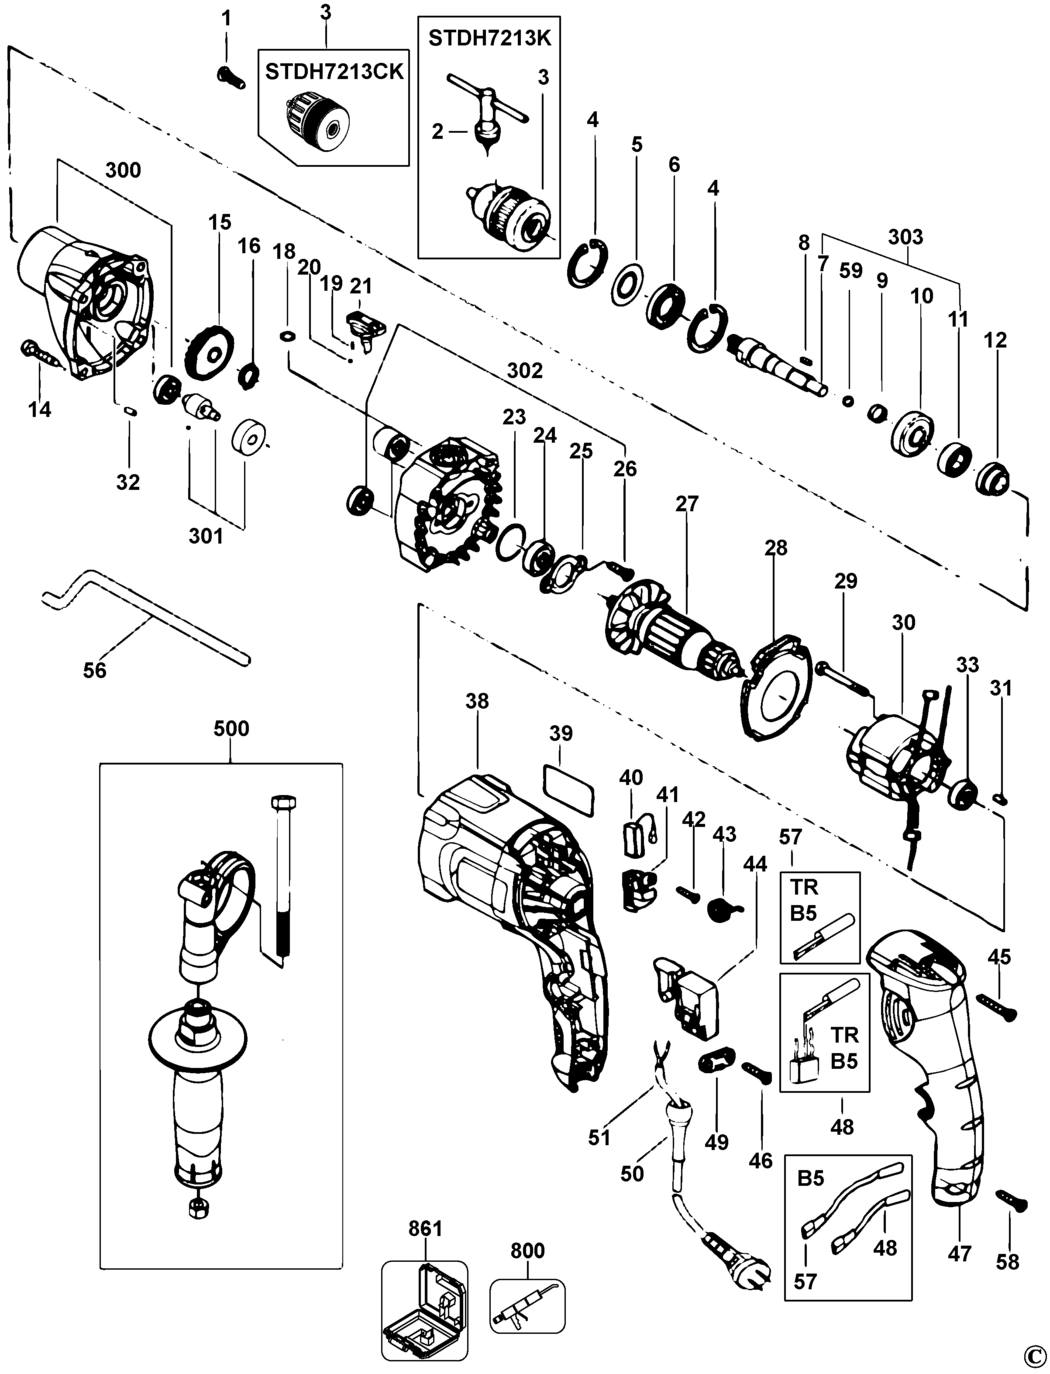 Stanley STDH7213 Type 1 Hammer Drill Spare Parts